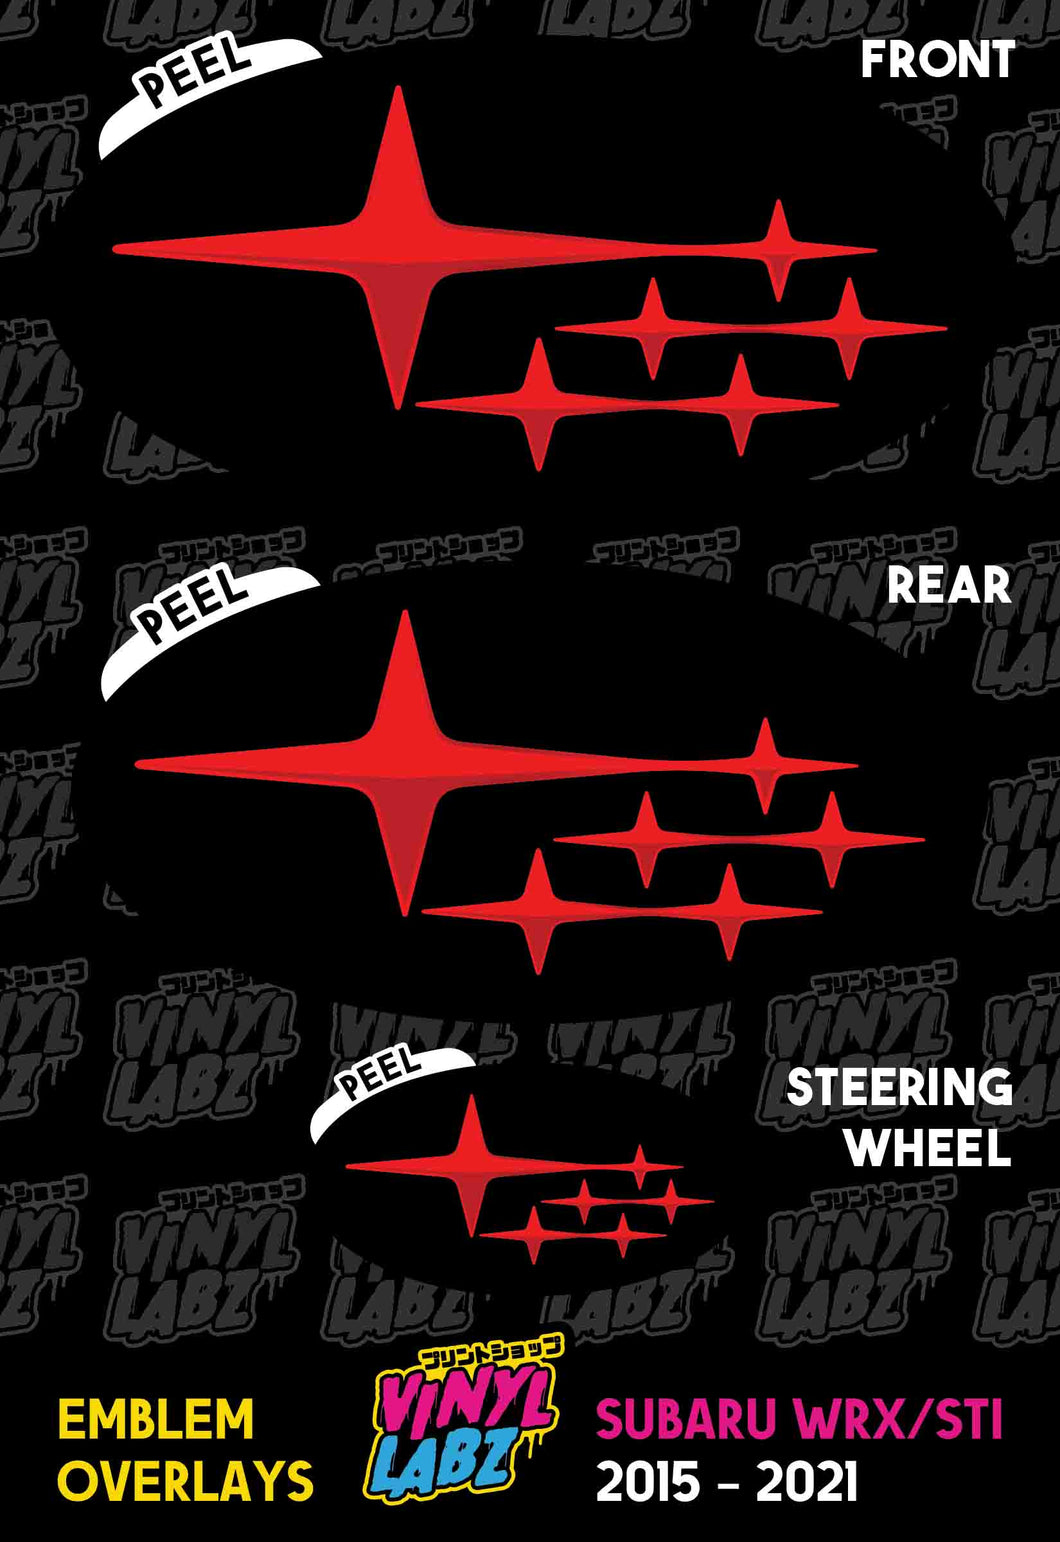 Subaru Vinyl Emblem Overlay (Black and Red) | 2015-2021 Subaru WRX/STI